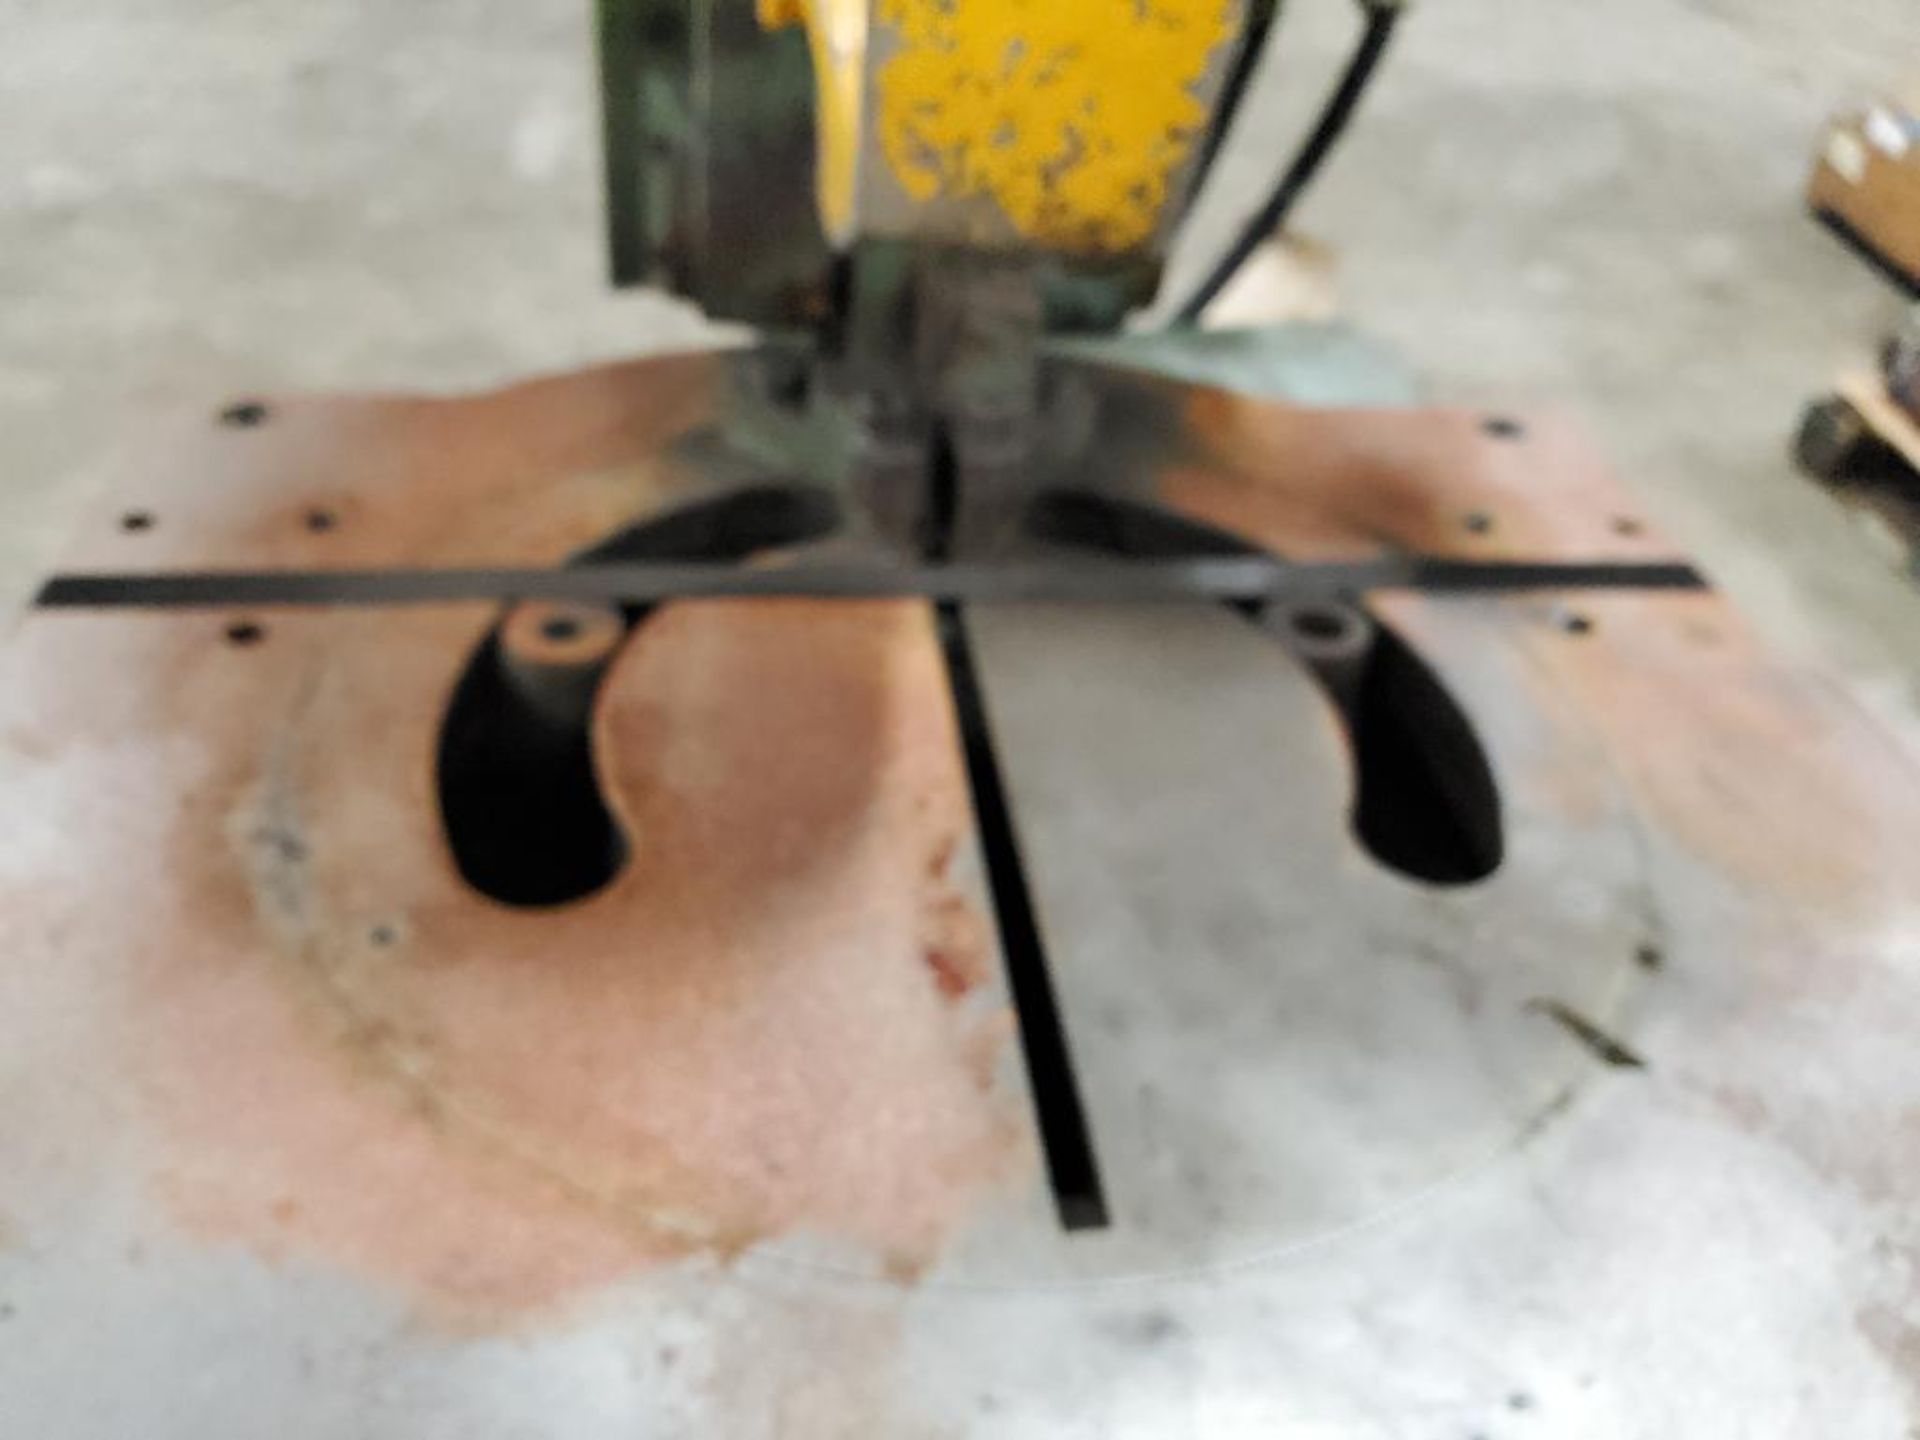 Doringer D350 cold saw with swivel base. - Image 6 of 11